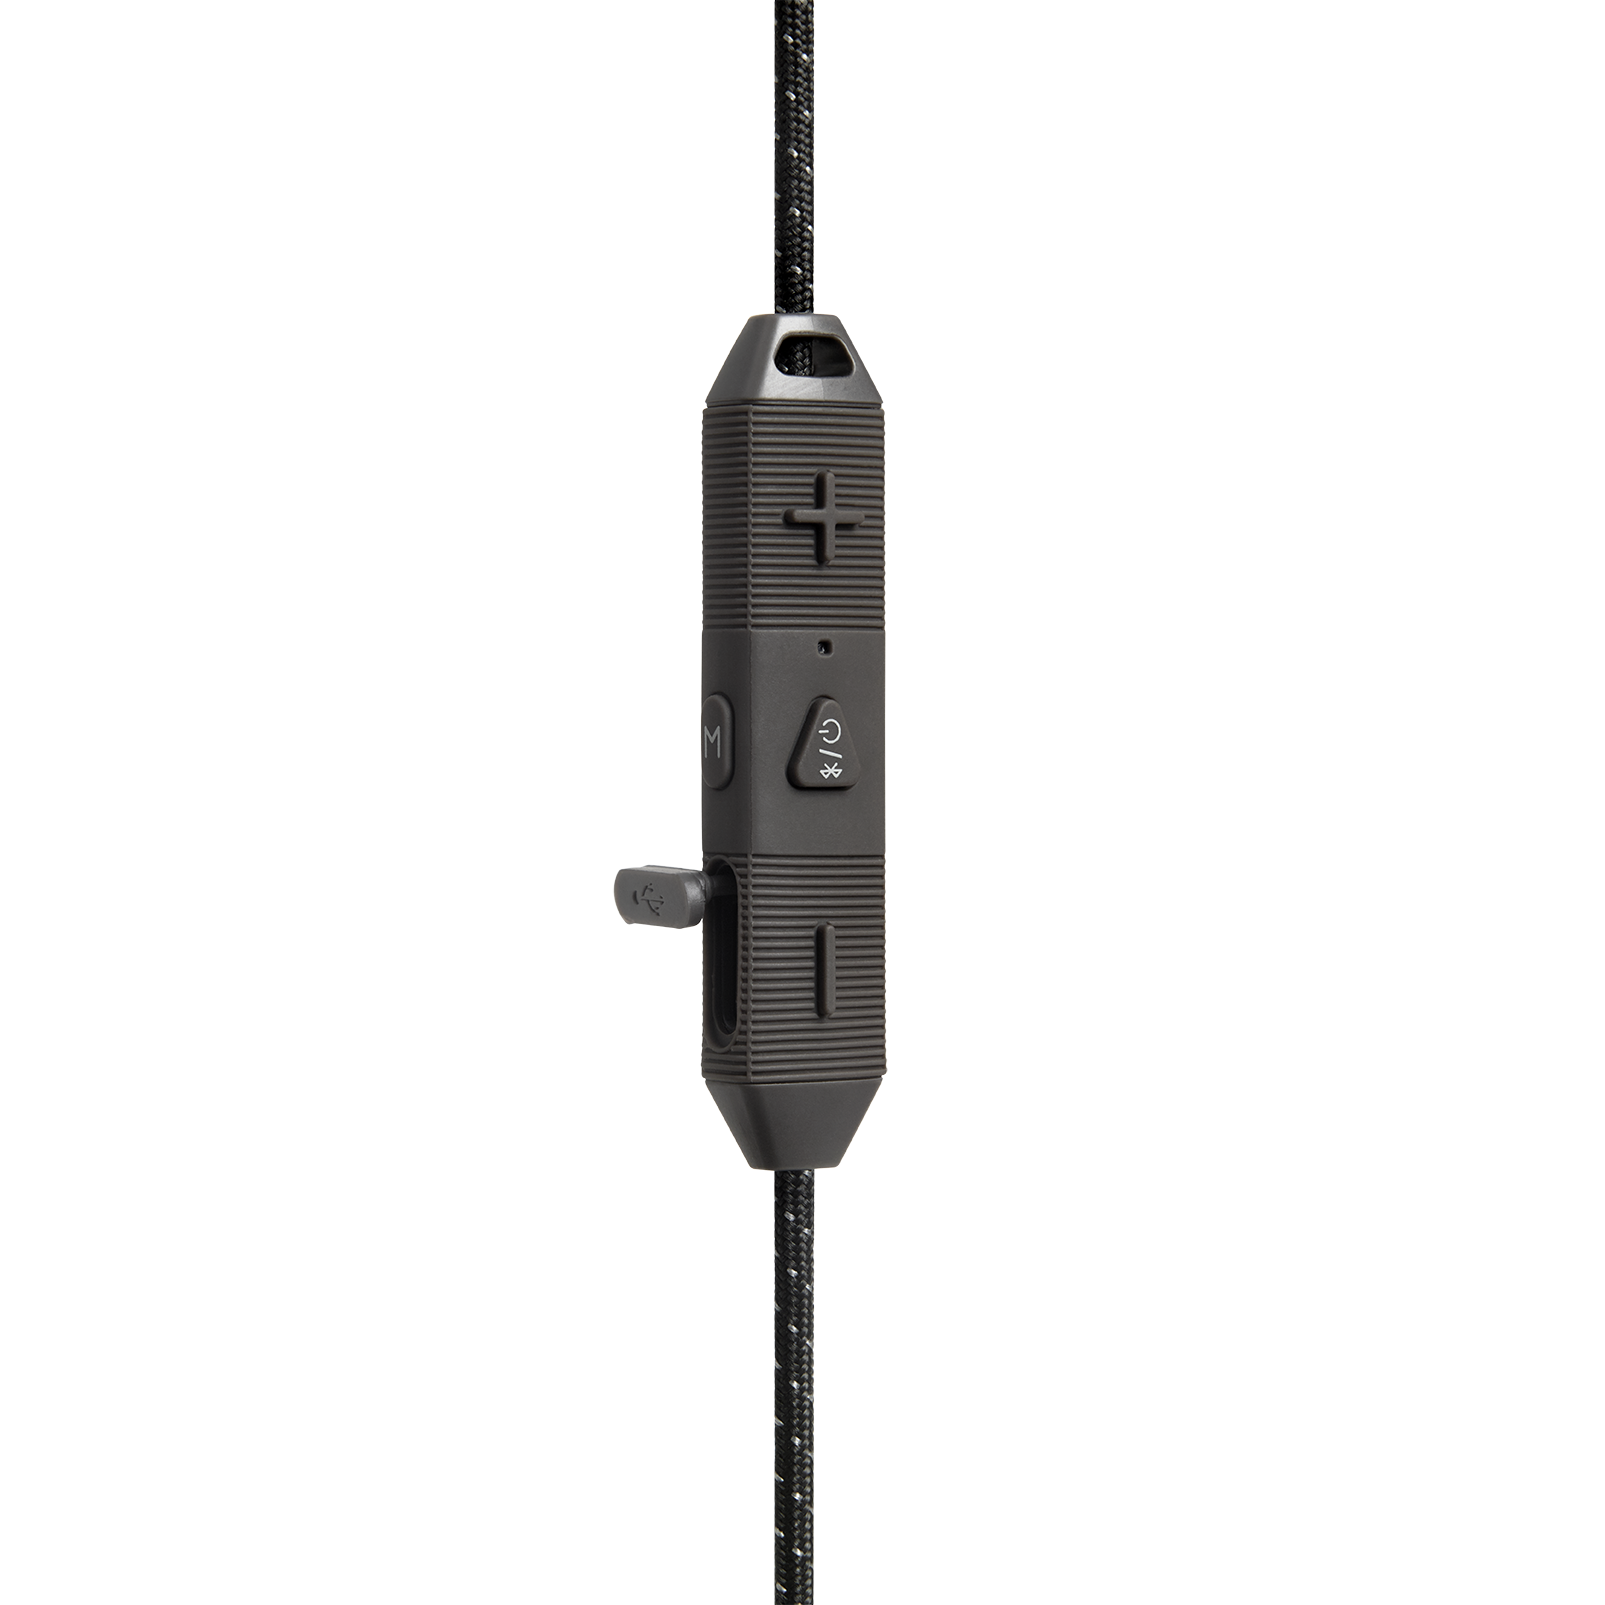 UA Sport Wireless PIVOT - Black - Secure-fitting wireless sport earphones with JBL technology and sound - Detailshot 3